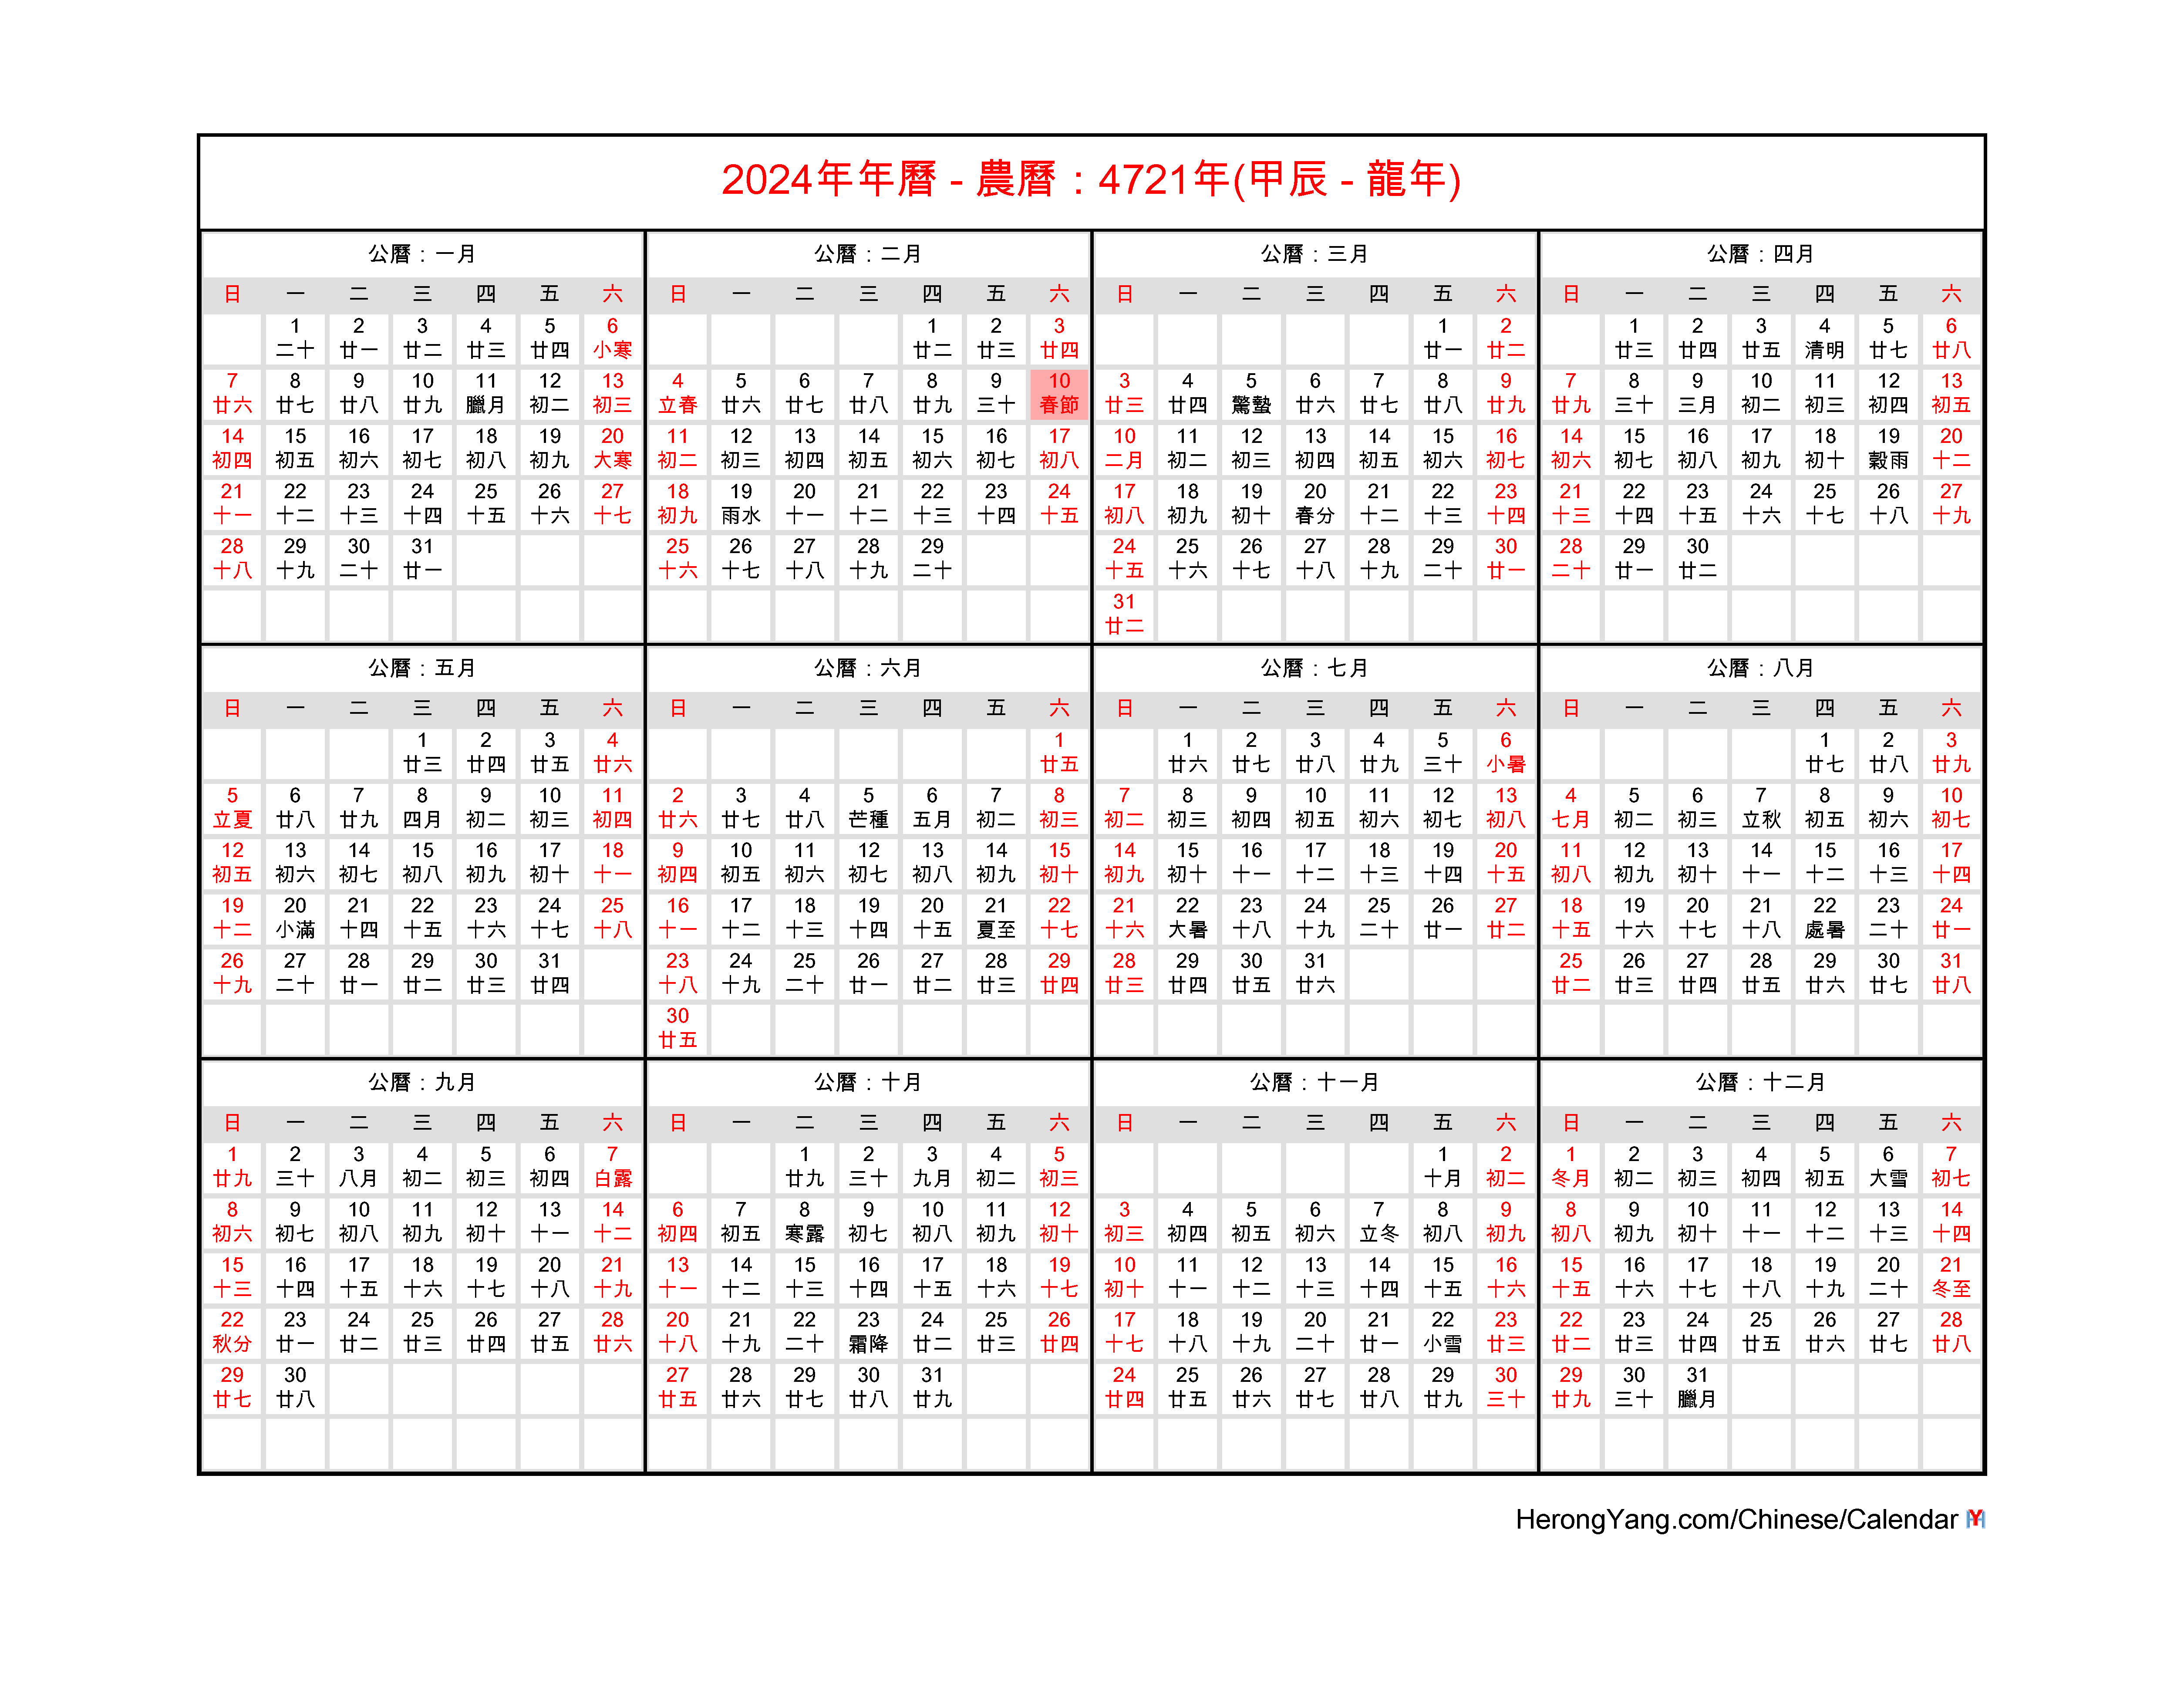 Chinese Calendar 2024